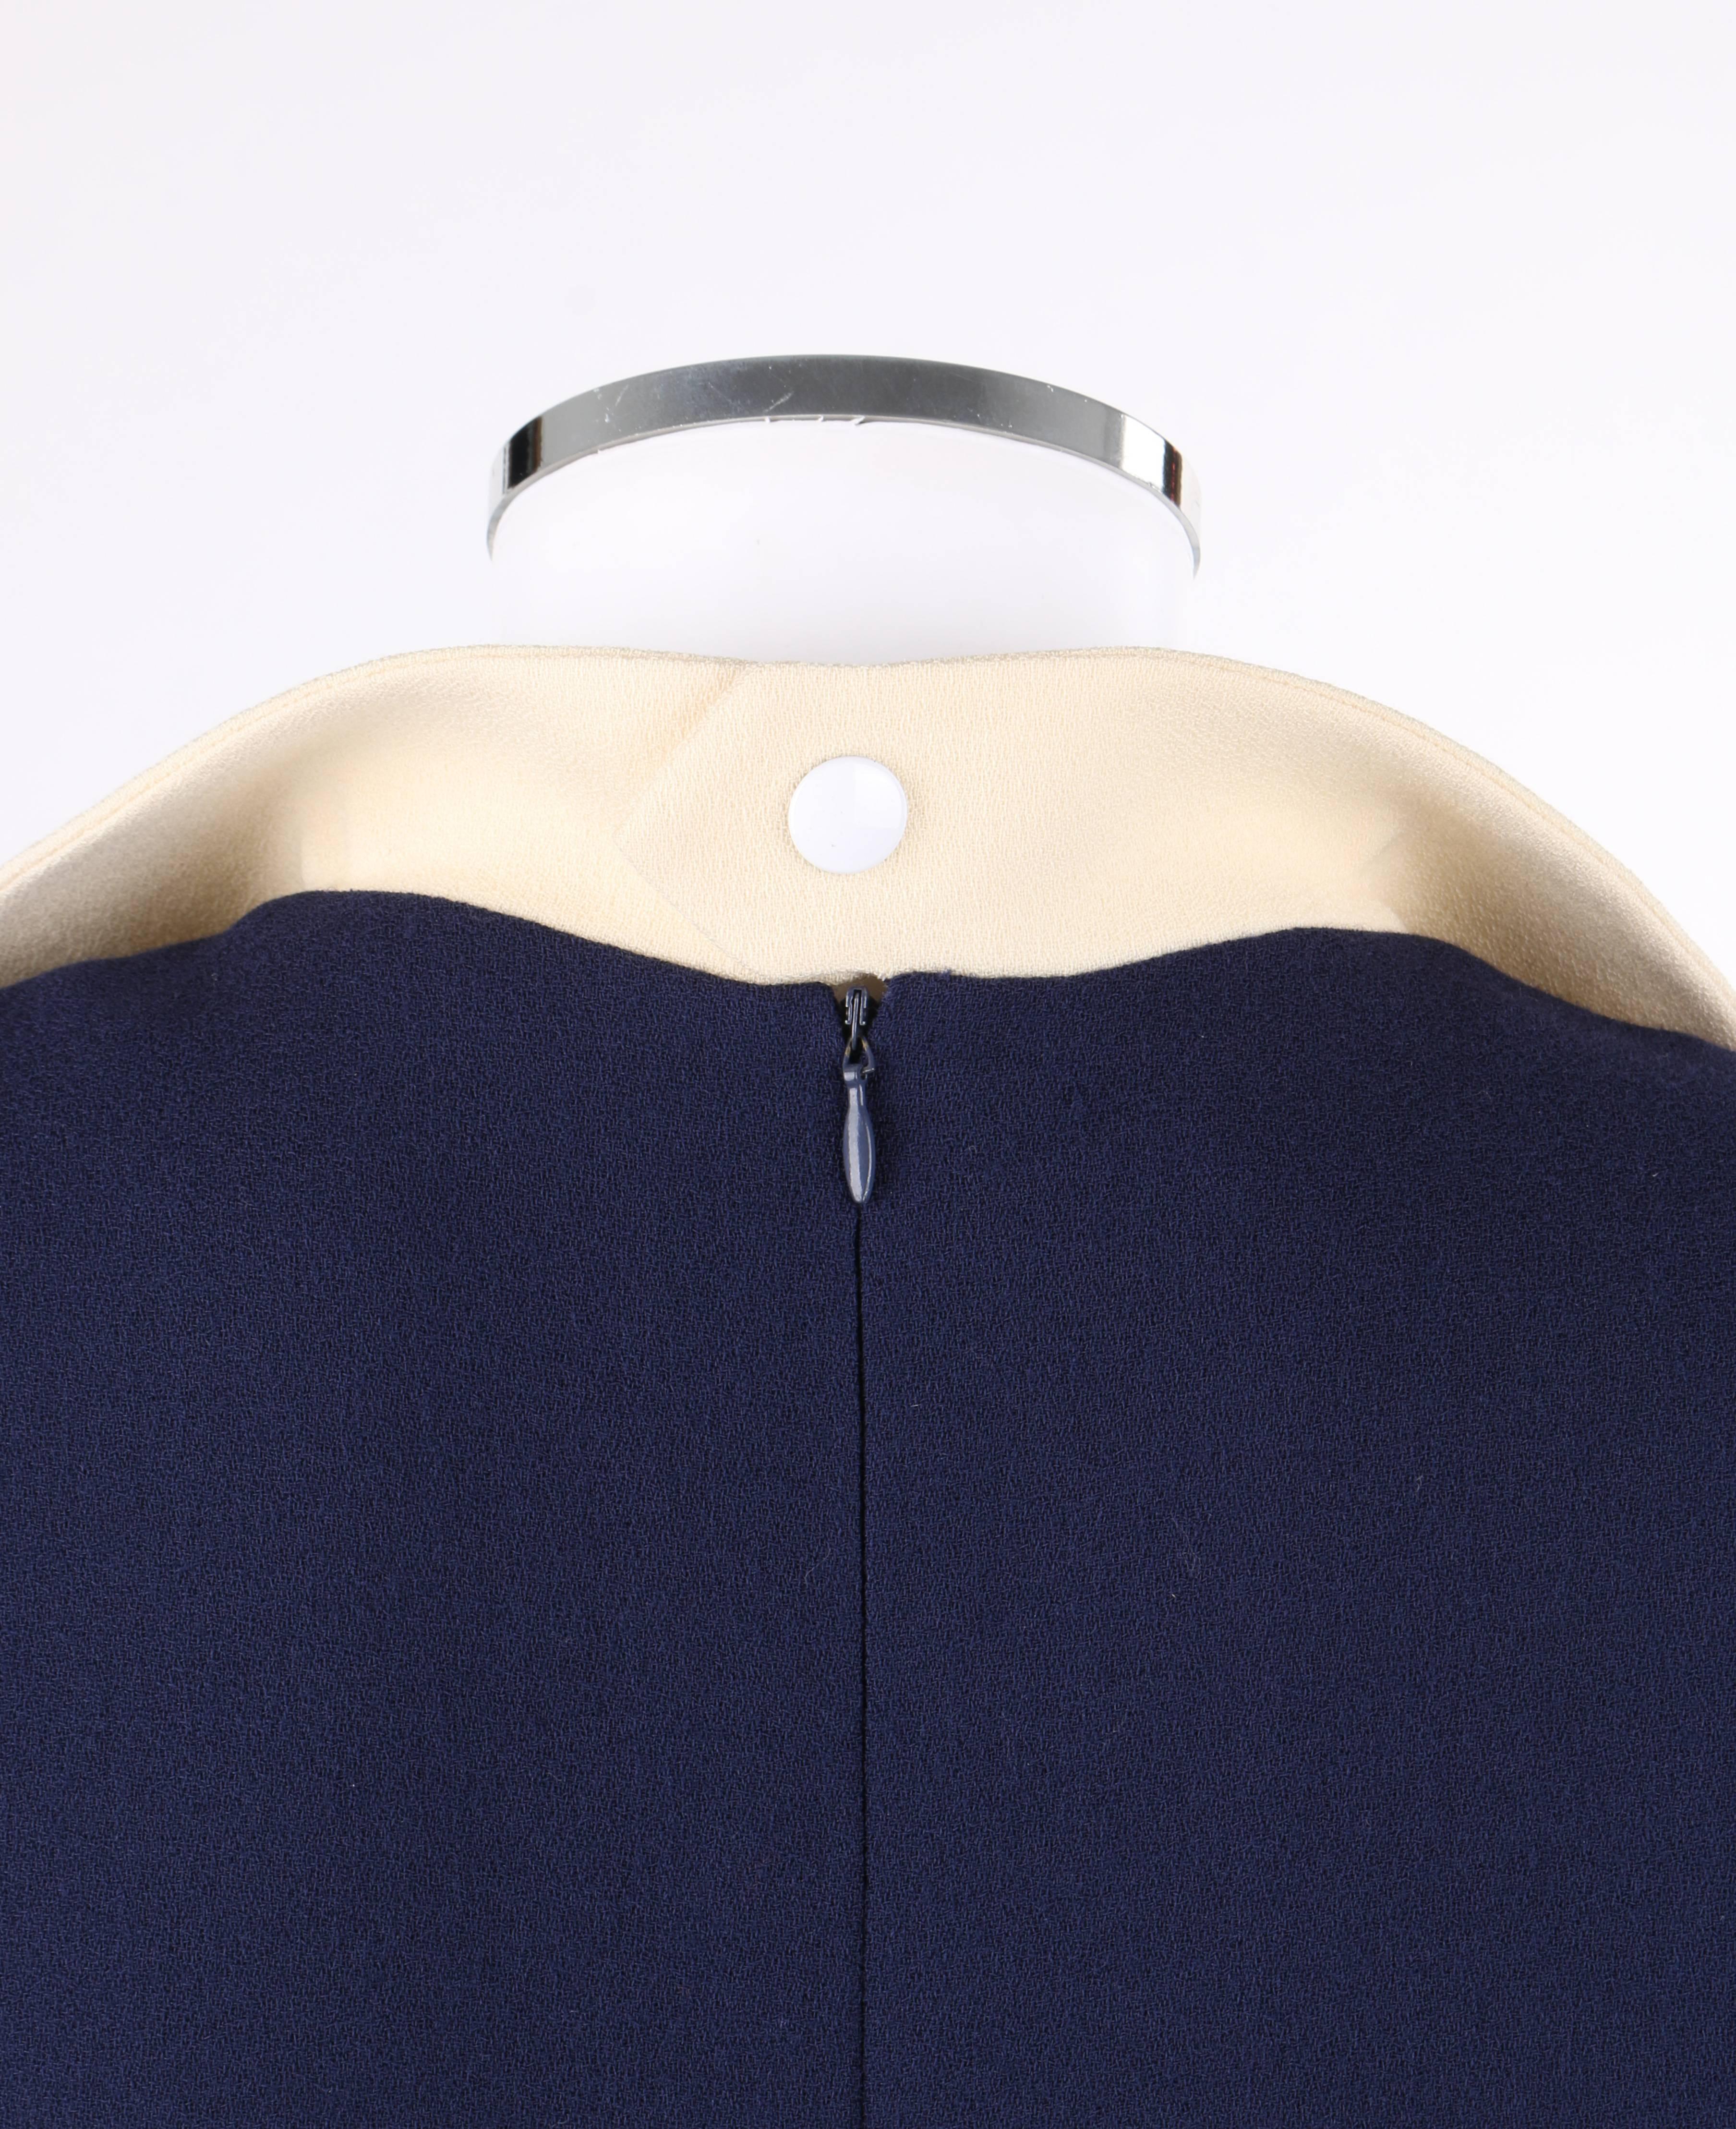 PIERRE CARDIN c.1992 Navy Blue & Ivory Wool Statement Collar Mod Shift Dress 2